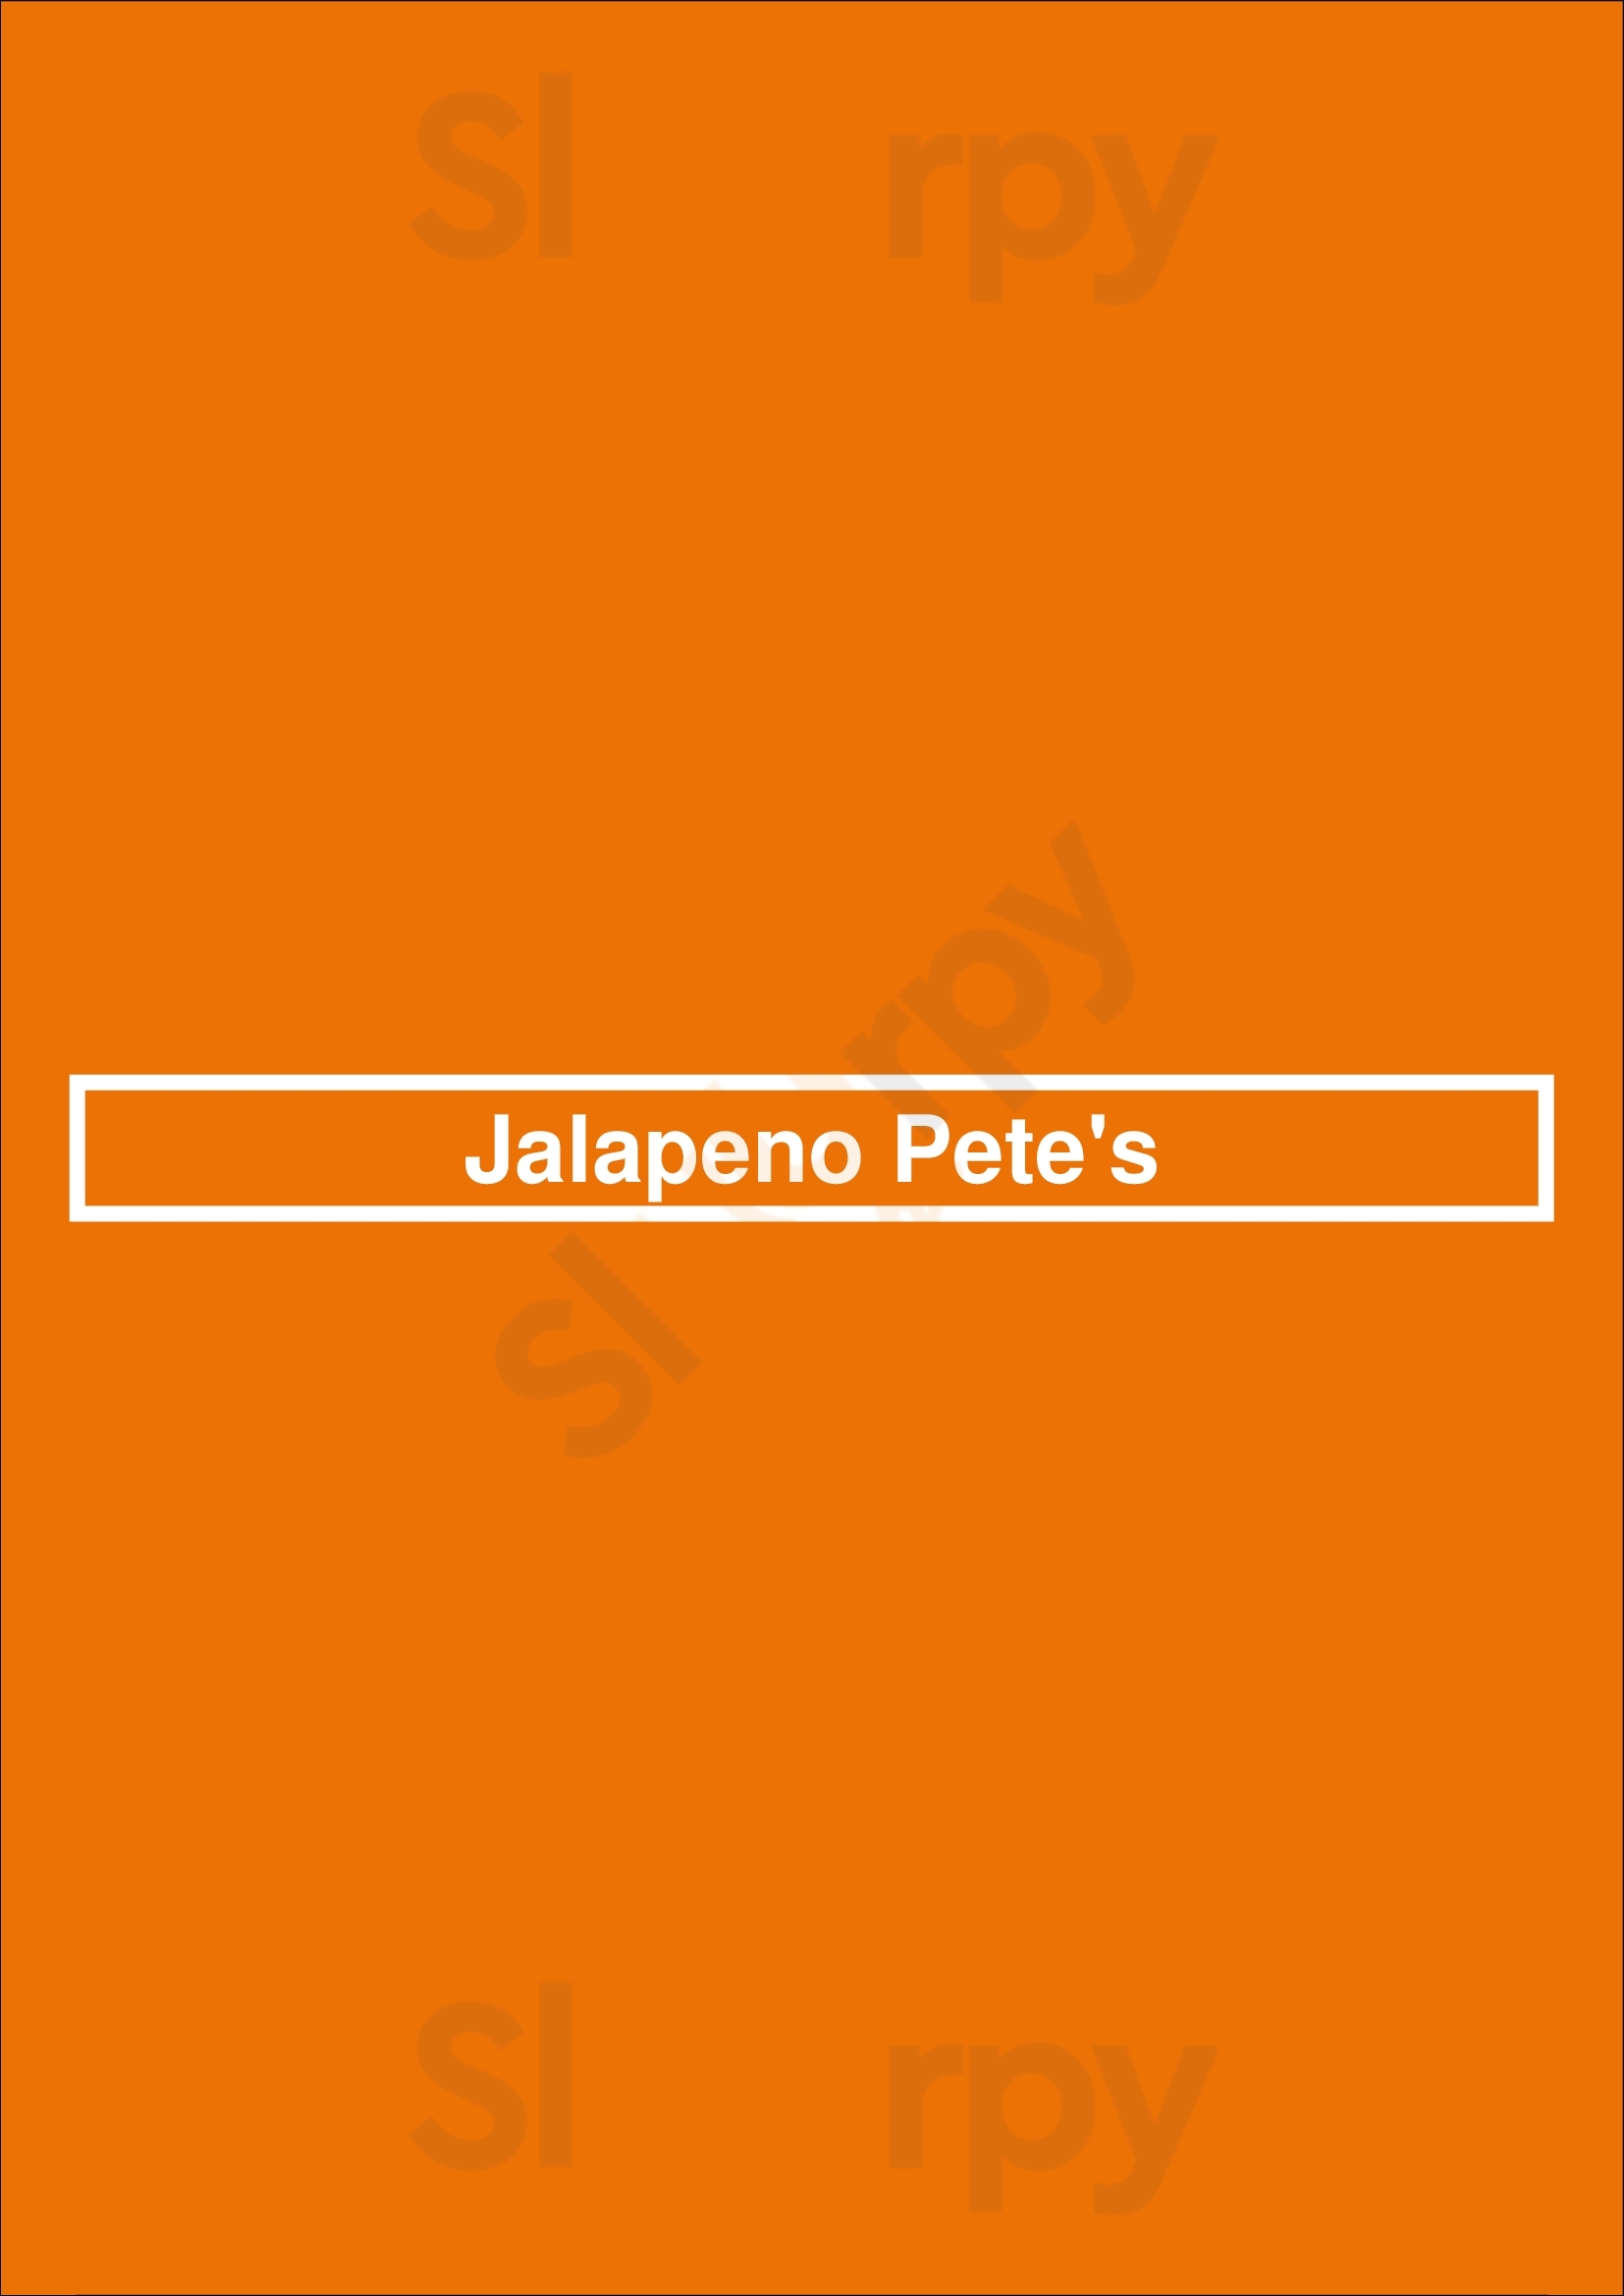 Jalapeno Pete's Los Angeles Menu - 1